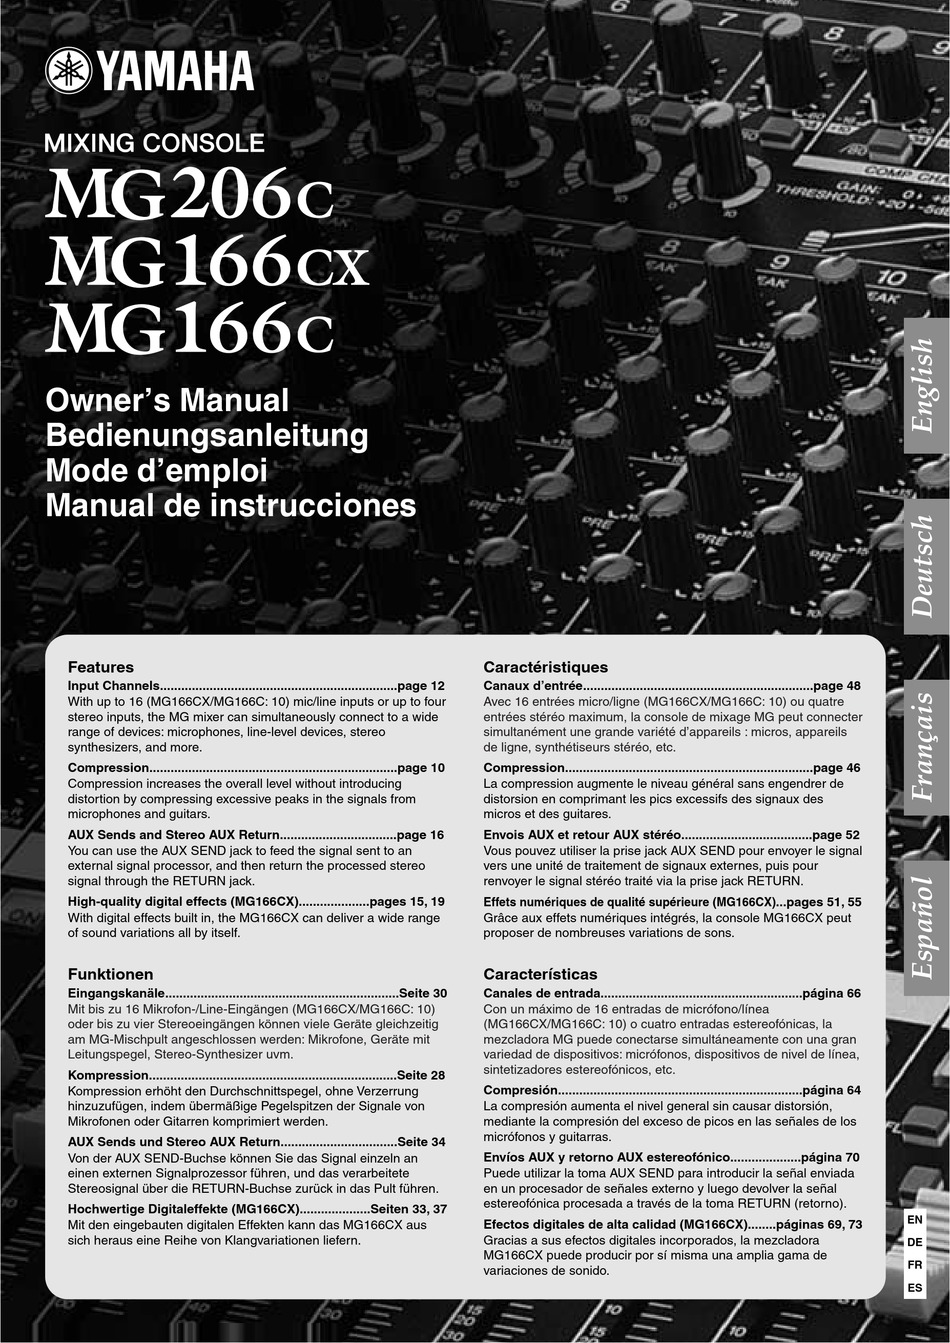 YAMAHA MG166C OWNER'S MANUAL Pdf Download | ManualsLib